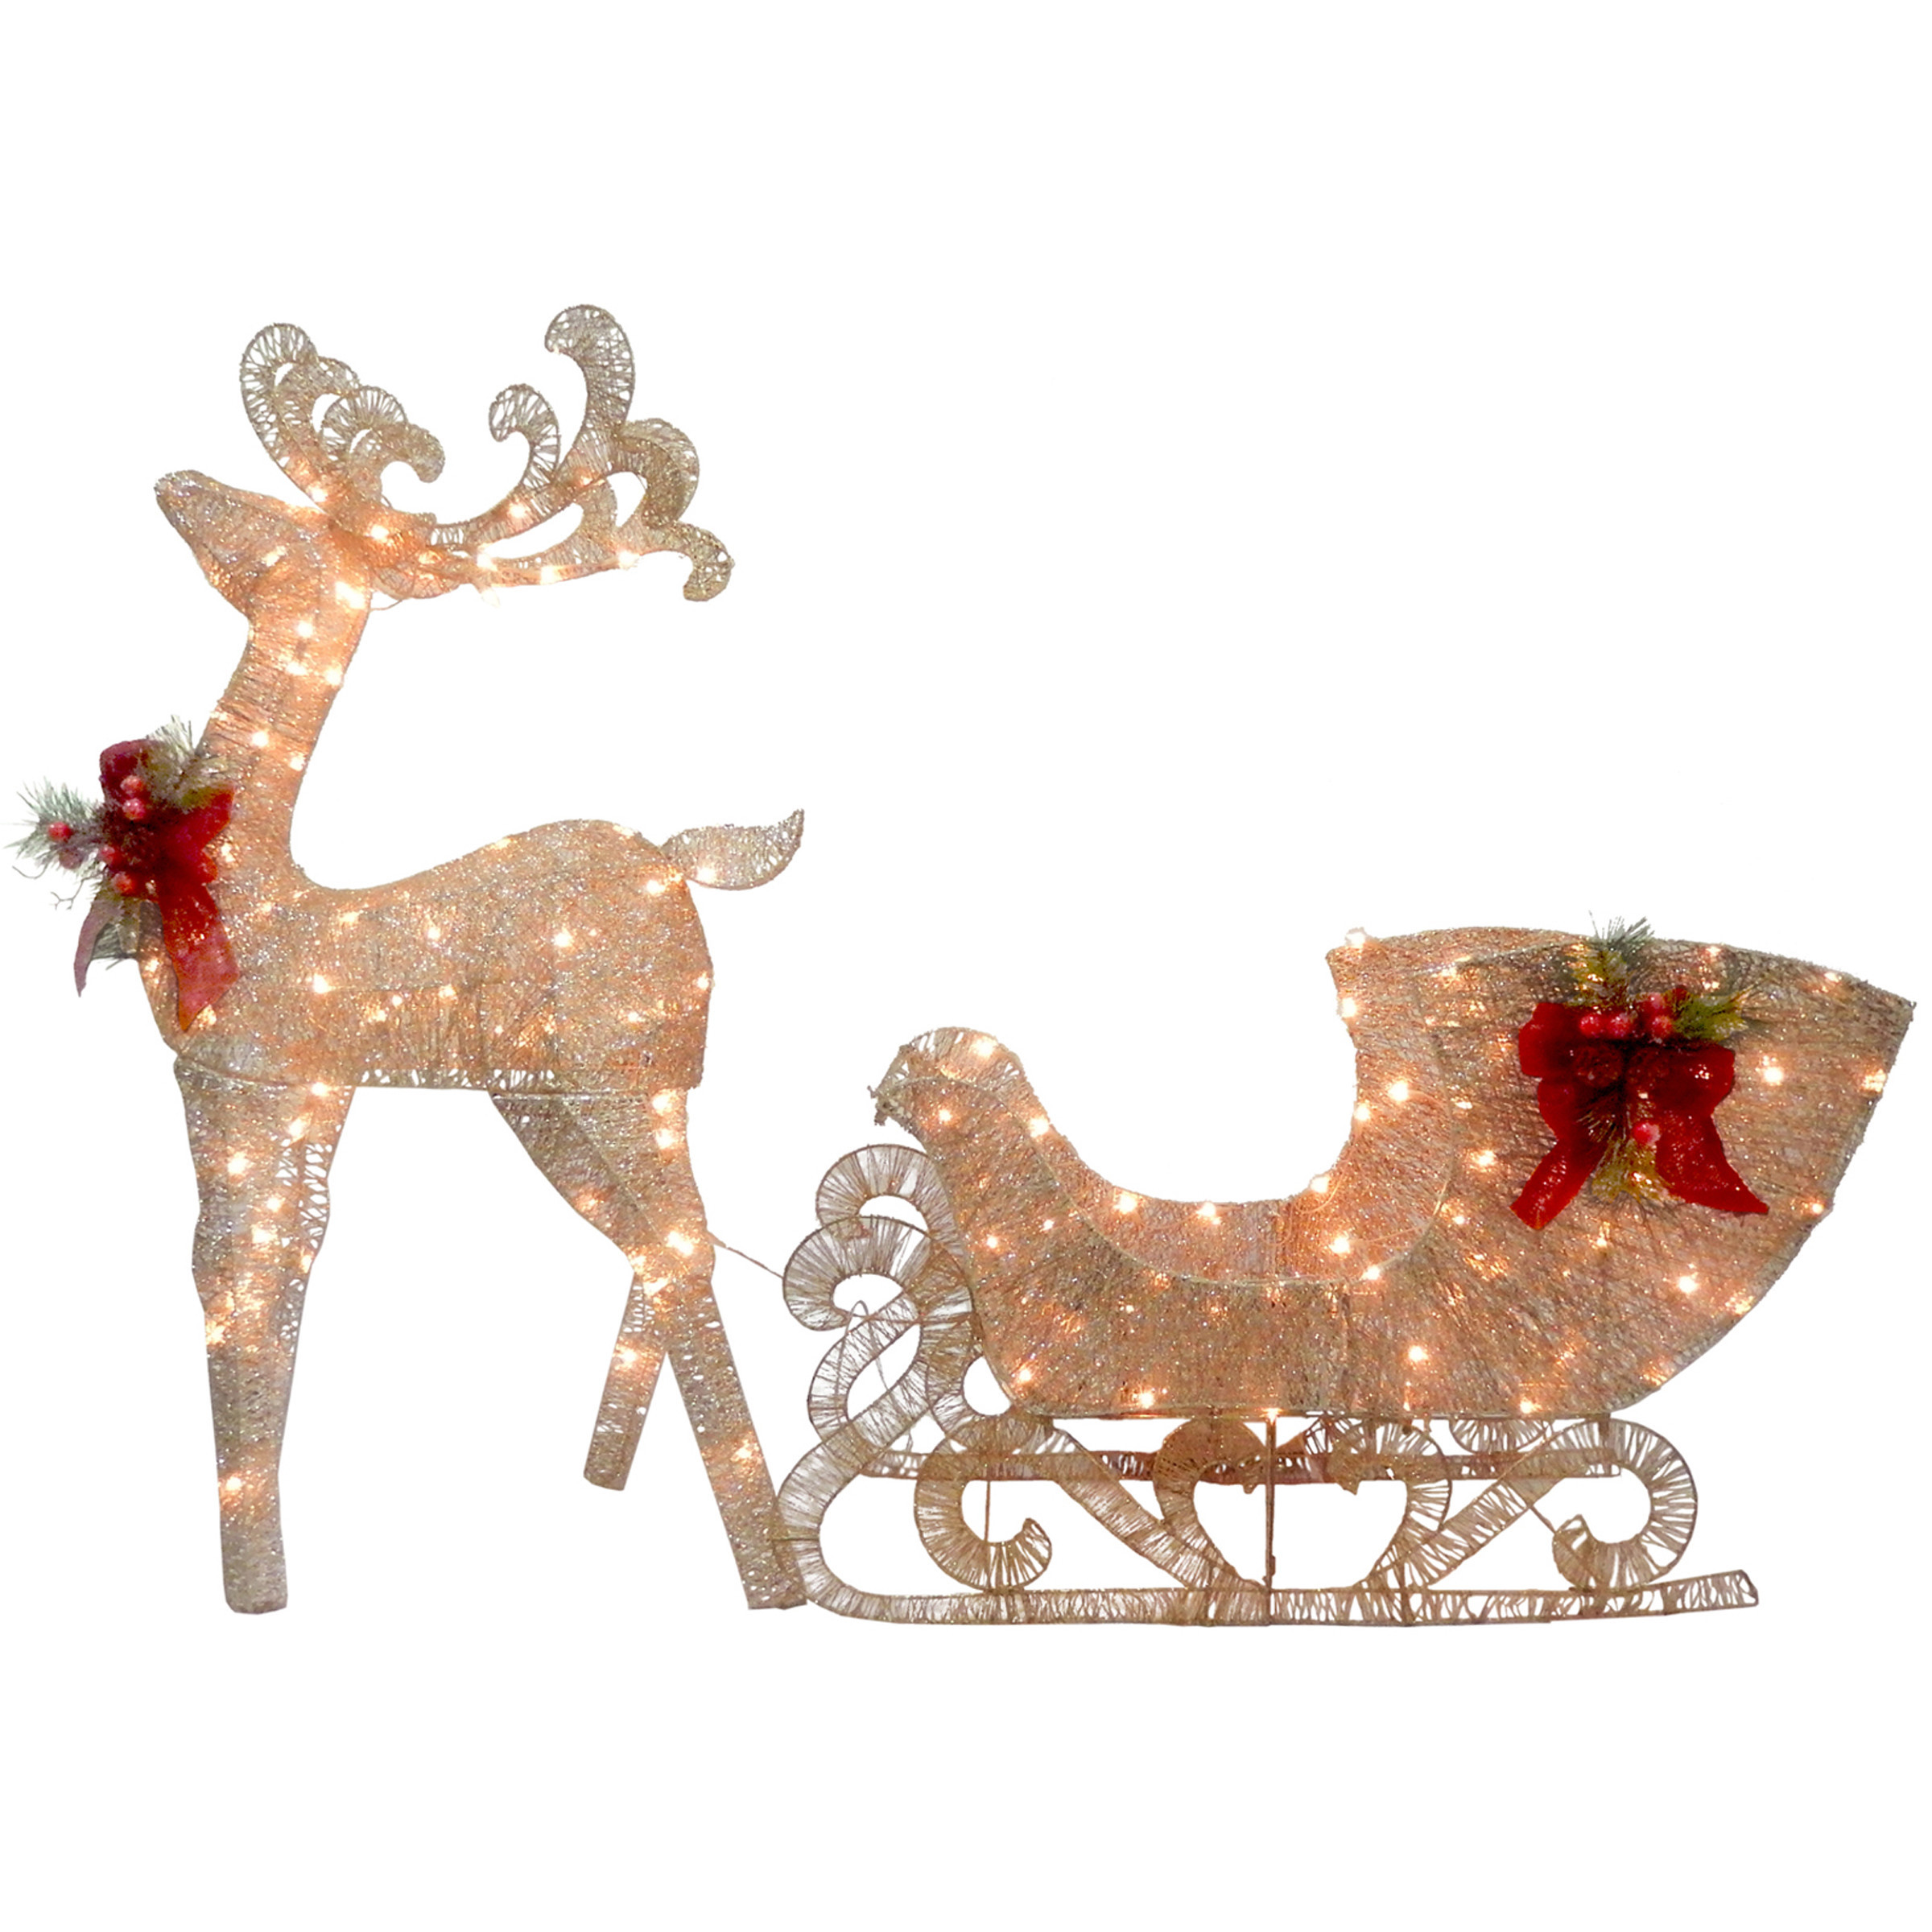 Outdoor Christmas Sleigh
 National Tree Co Reindeer and Santa’s Sleigh with LED